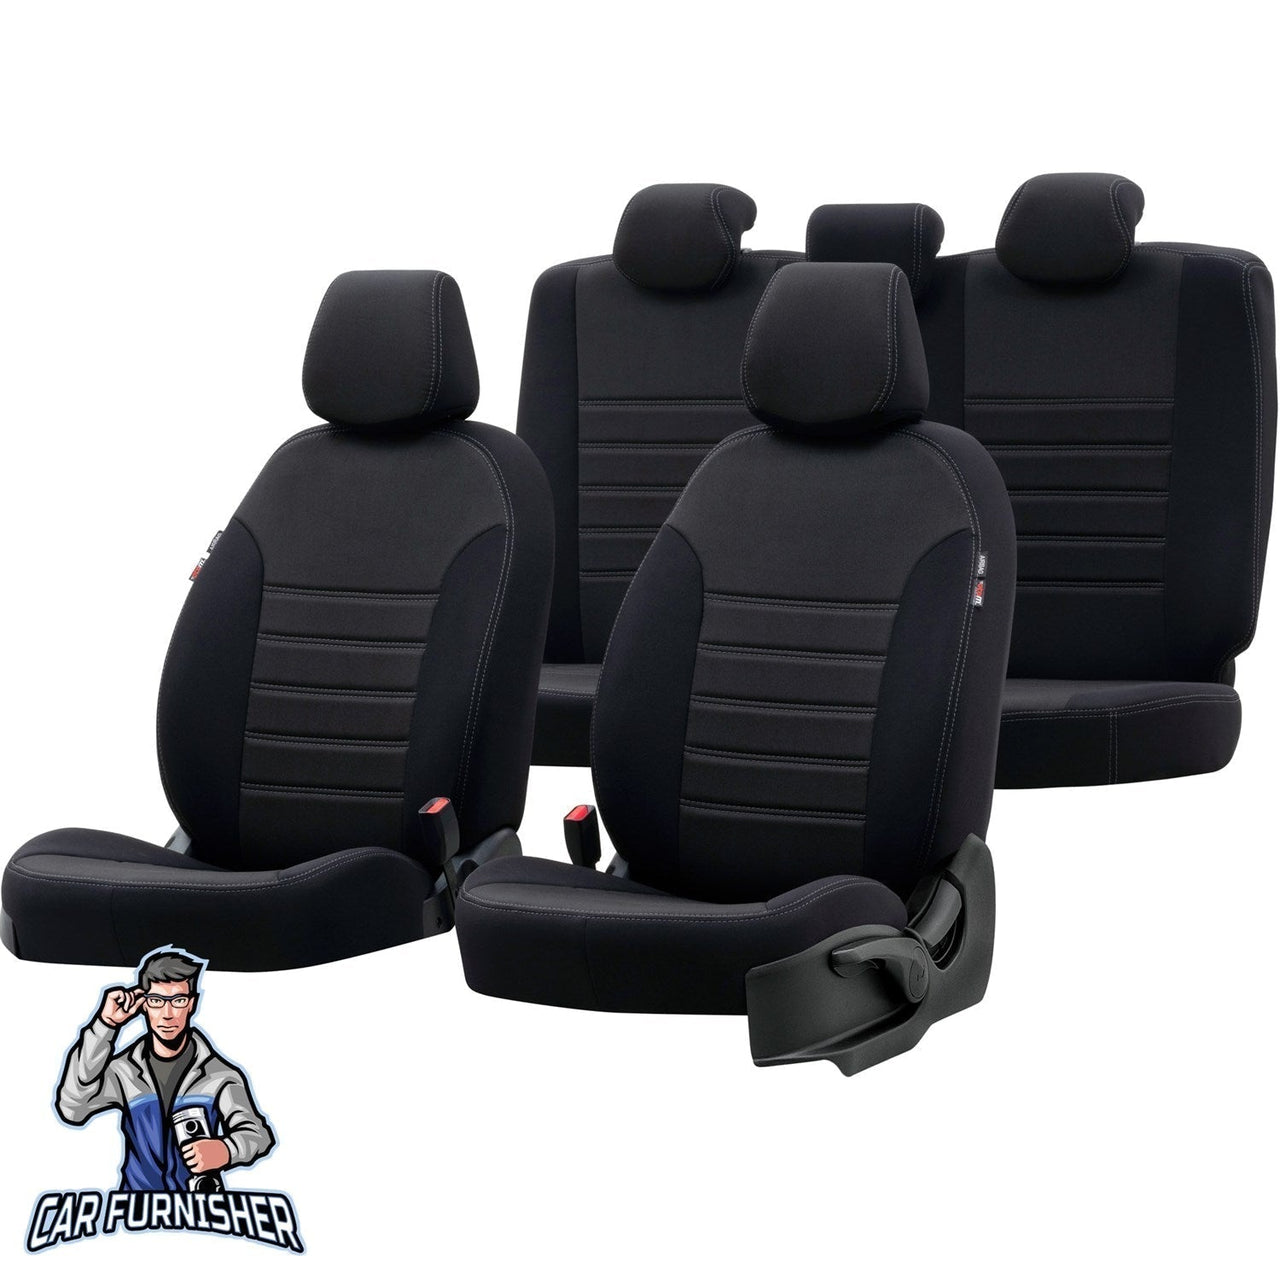 Man TGS Seat Cover Original Jacquard Design Black Front Seats (2 Seats + Handrest + Headrests) Jacquard Fabric